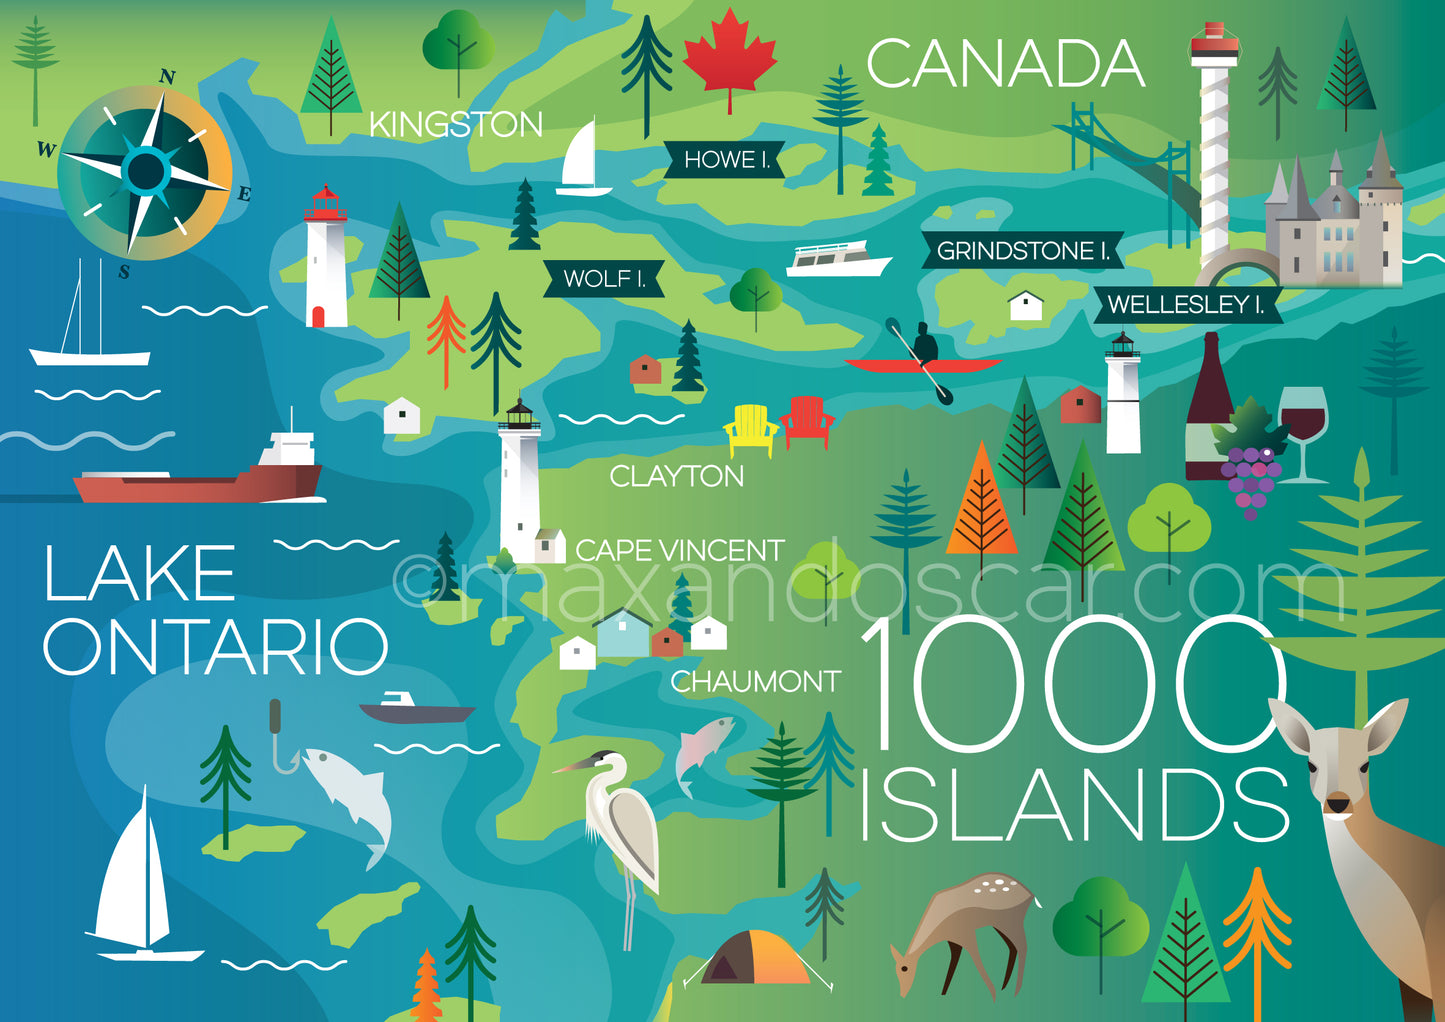 1000 Islands Postcard